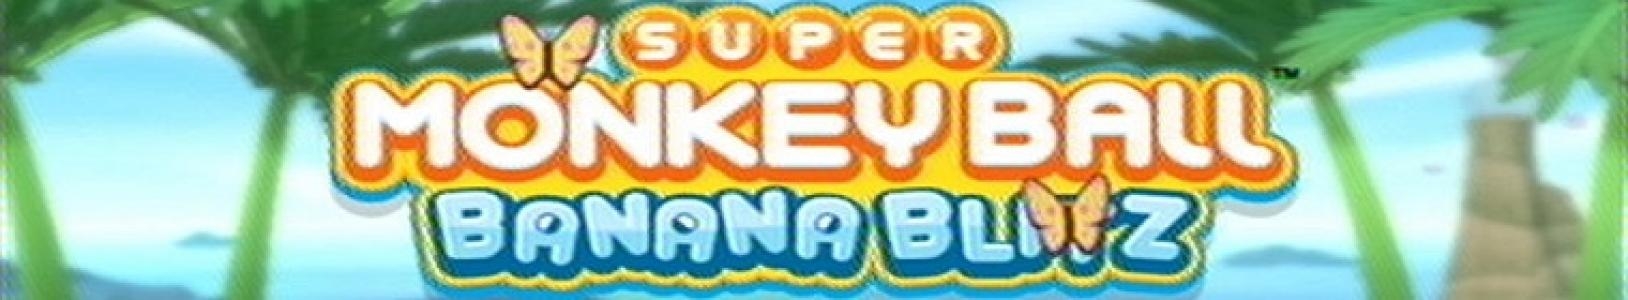 Super Monkey Ball: Banana Blitz banner